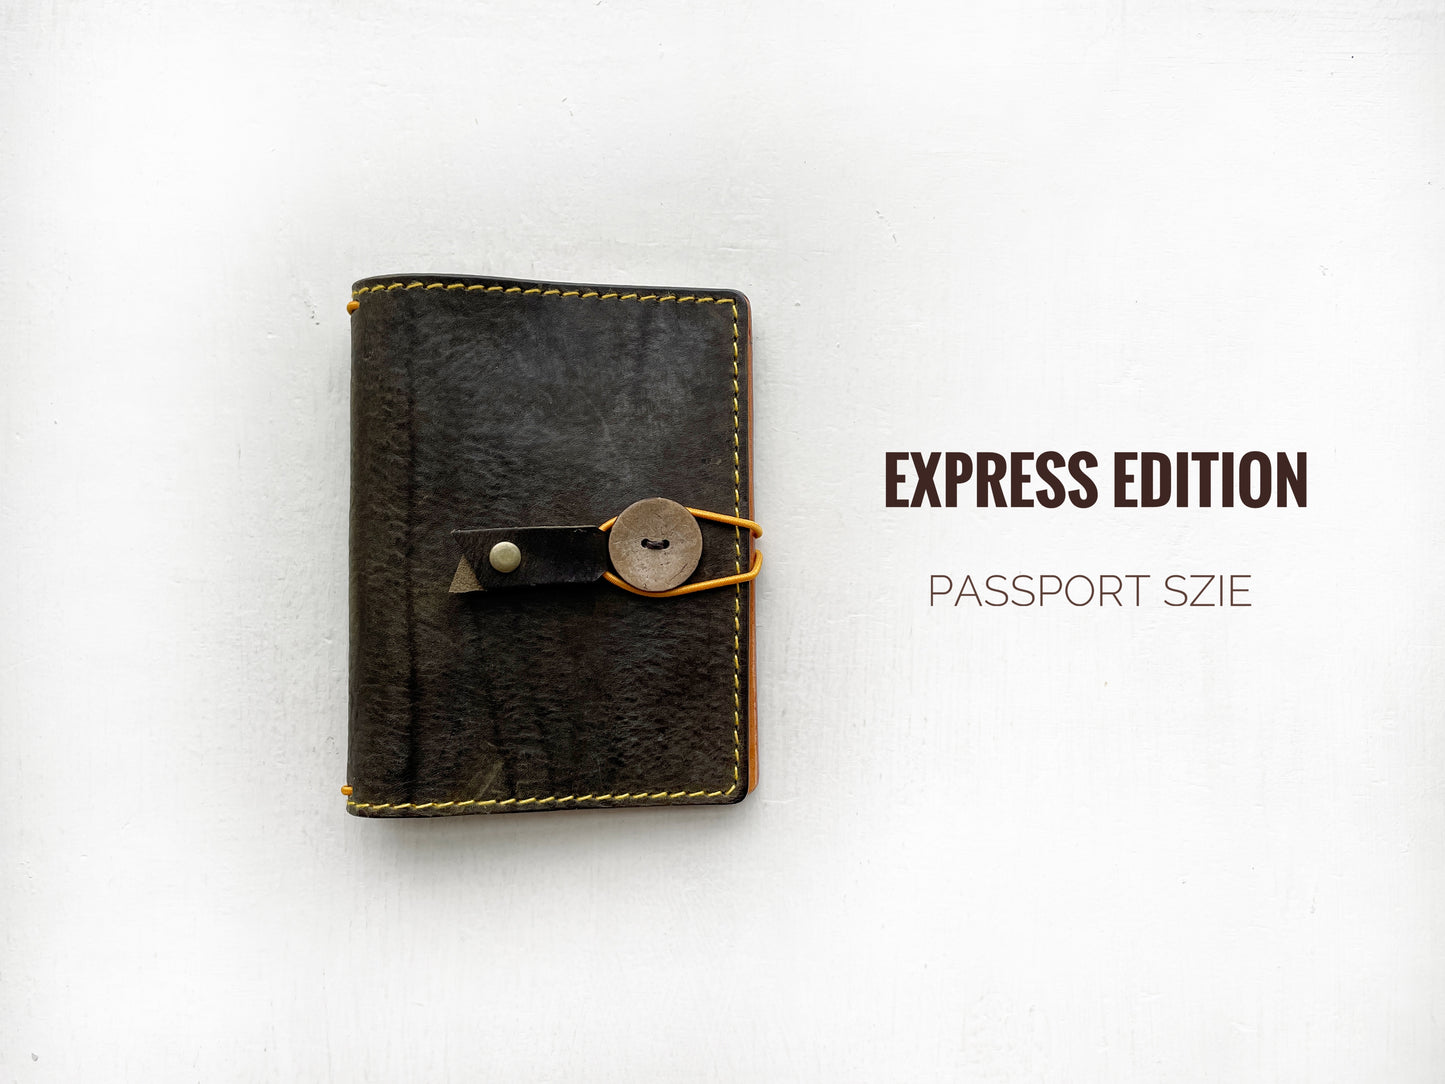 Express Edition, Passport Size